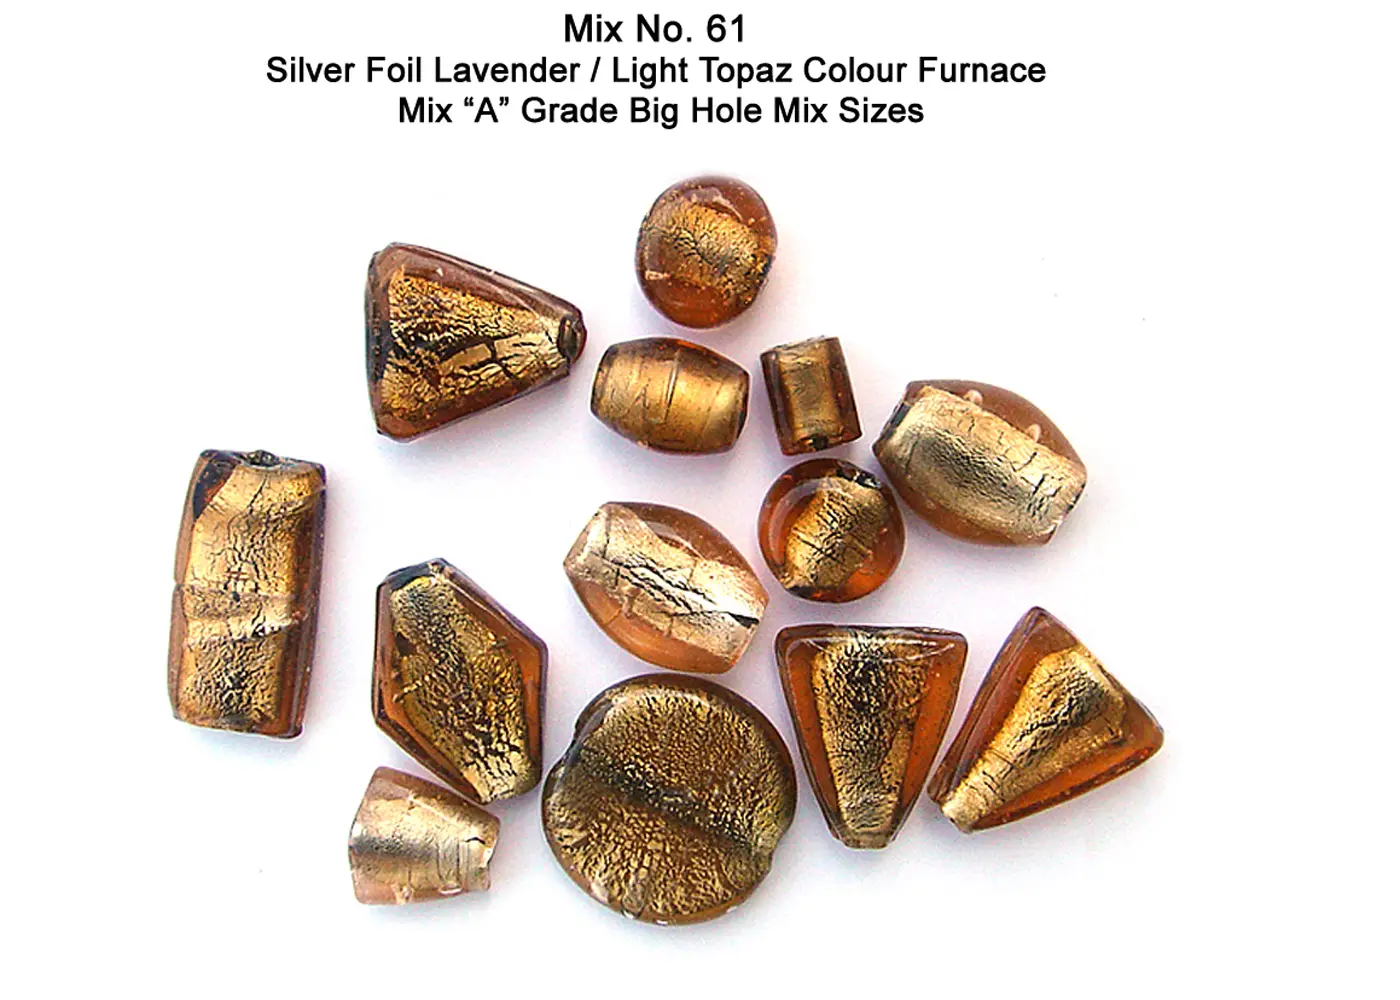 Silver Foil lavender / Light Topaz Color Furnace Mix "A" Grade Big Hole mix sizes